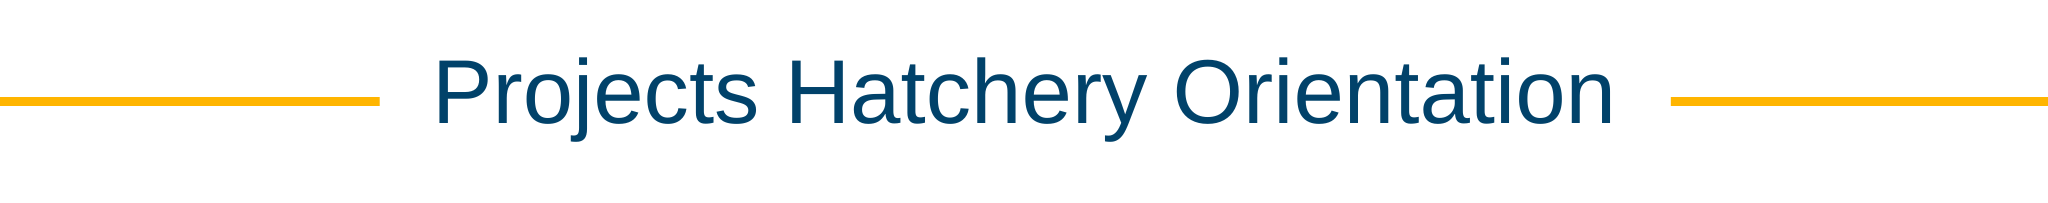 Projects Hatchery Orientation